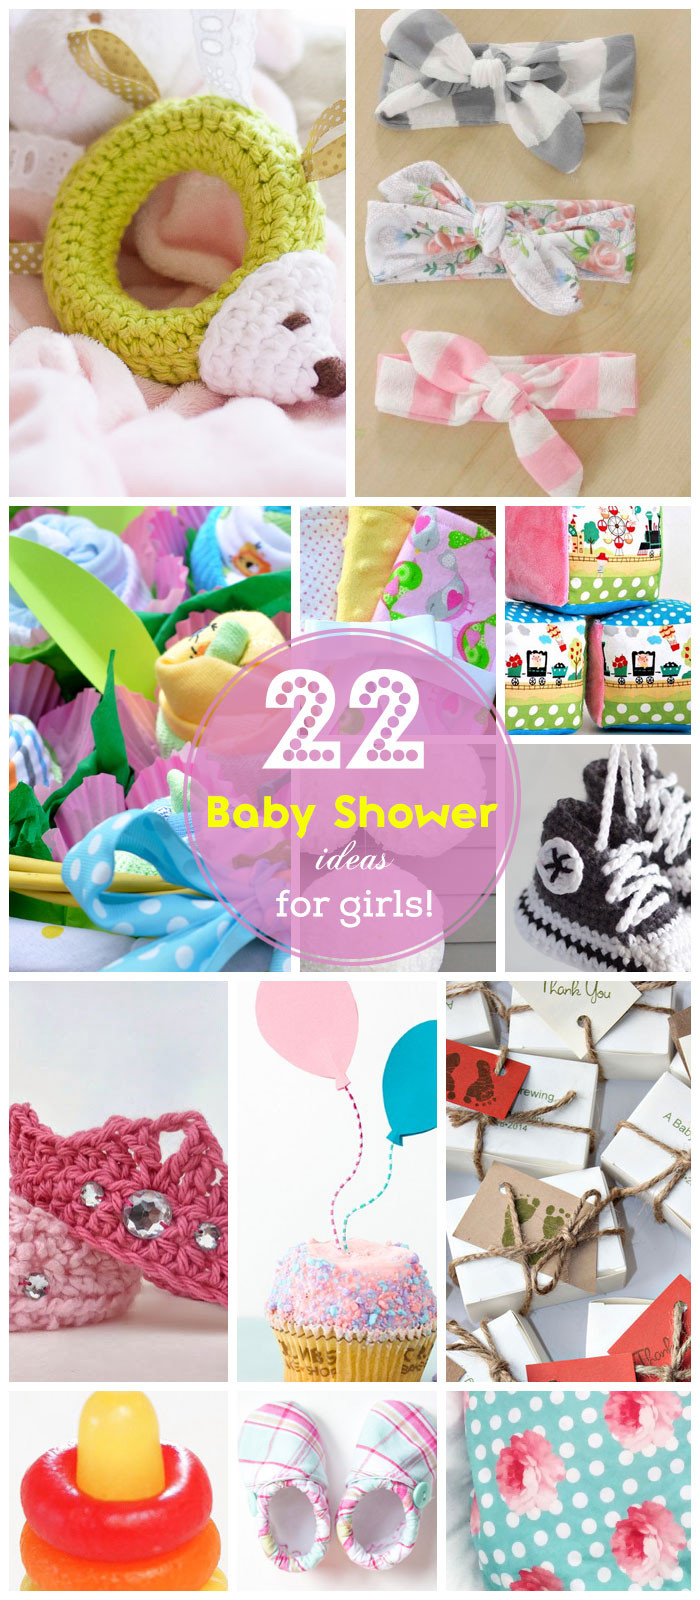 DIY Baby Shower Ideas For Girls
 35 DIY Baby Shower Ideas for Girls